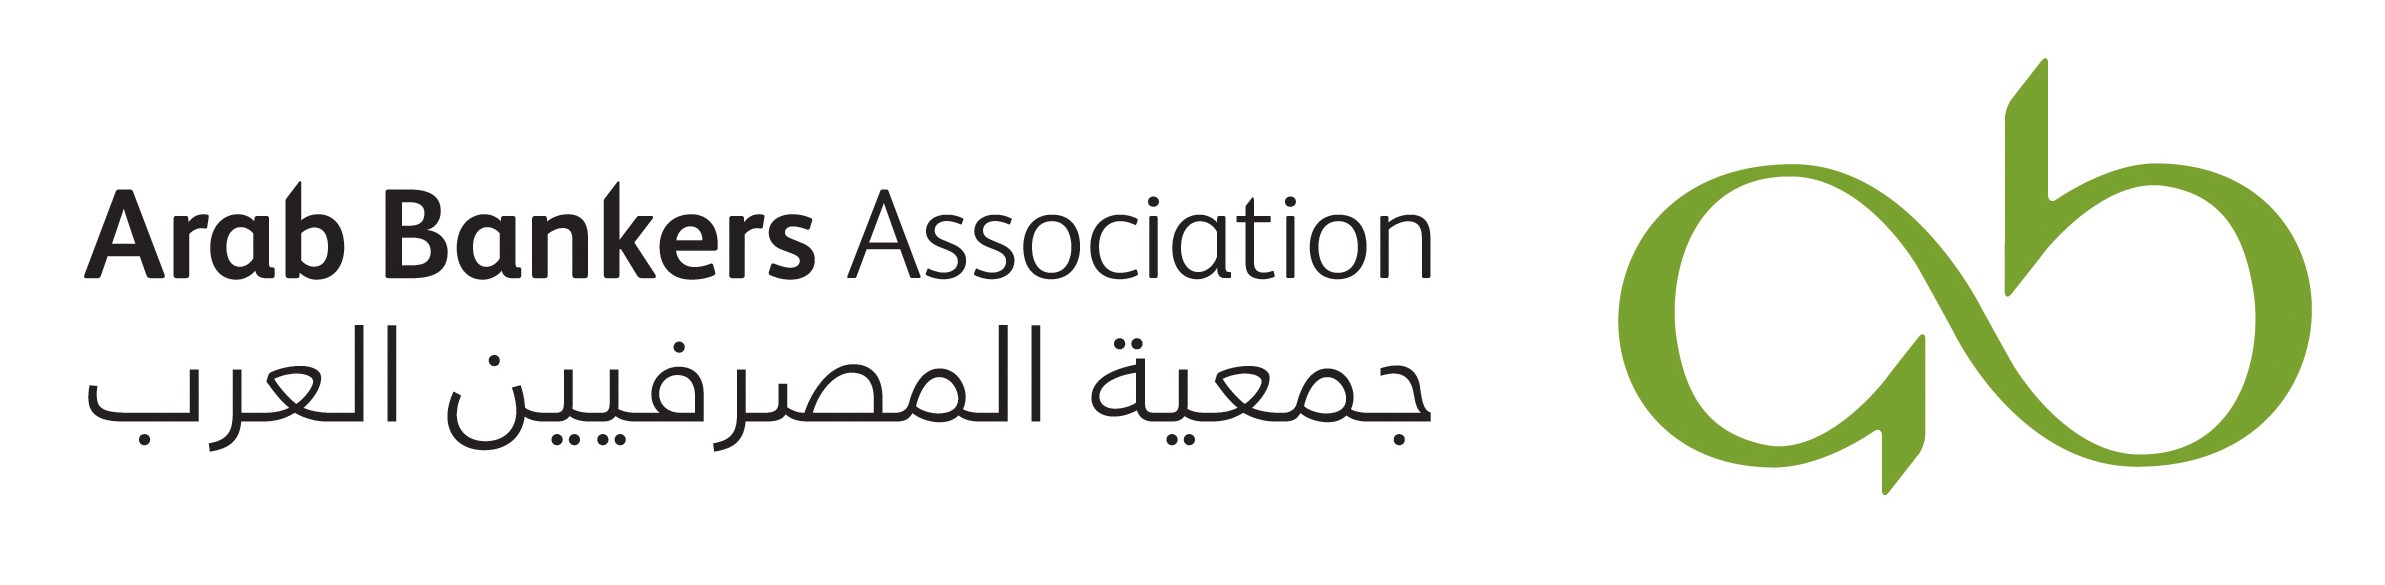 Arab Bankers Association